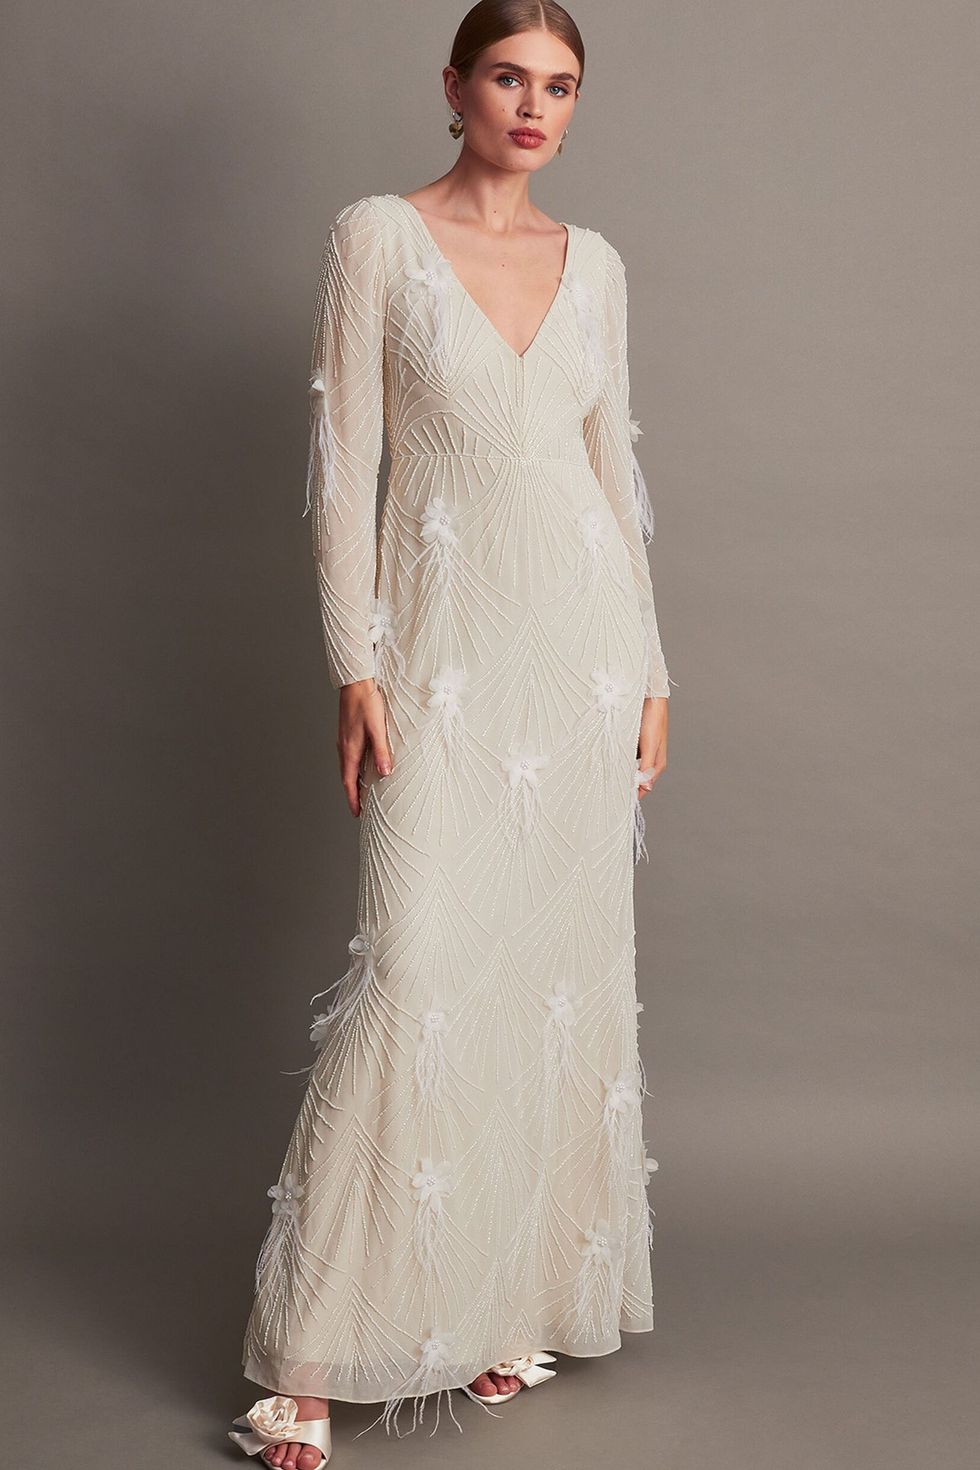 Florence embellished bridal dress ivory